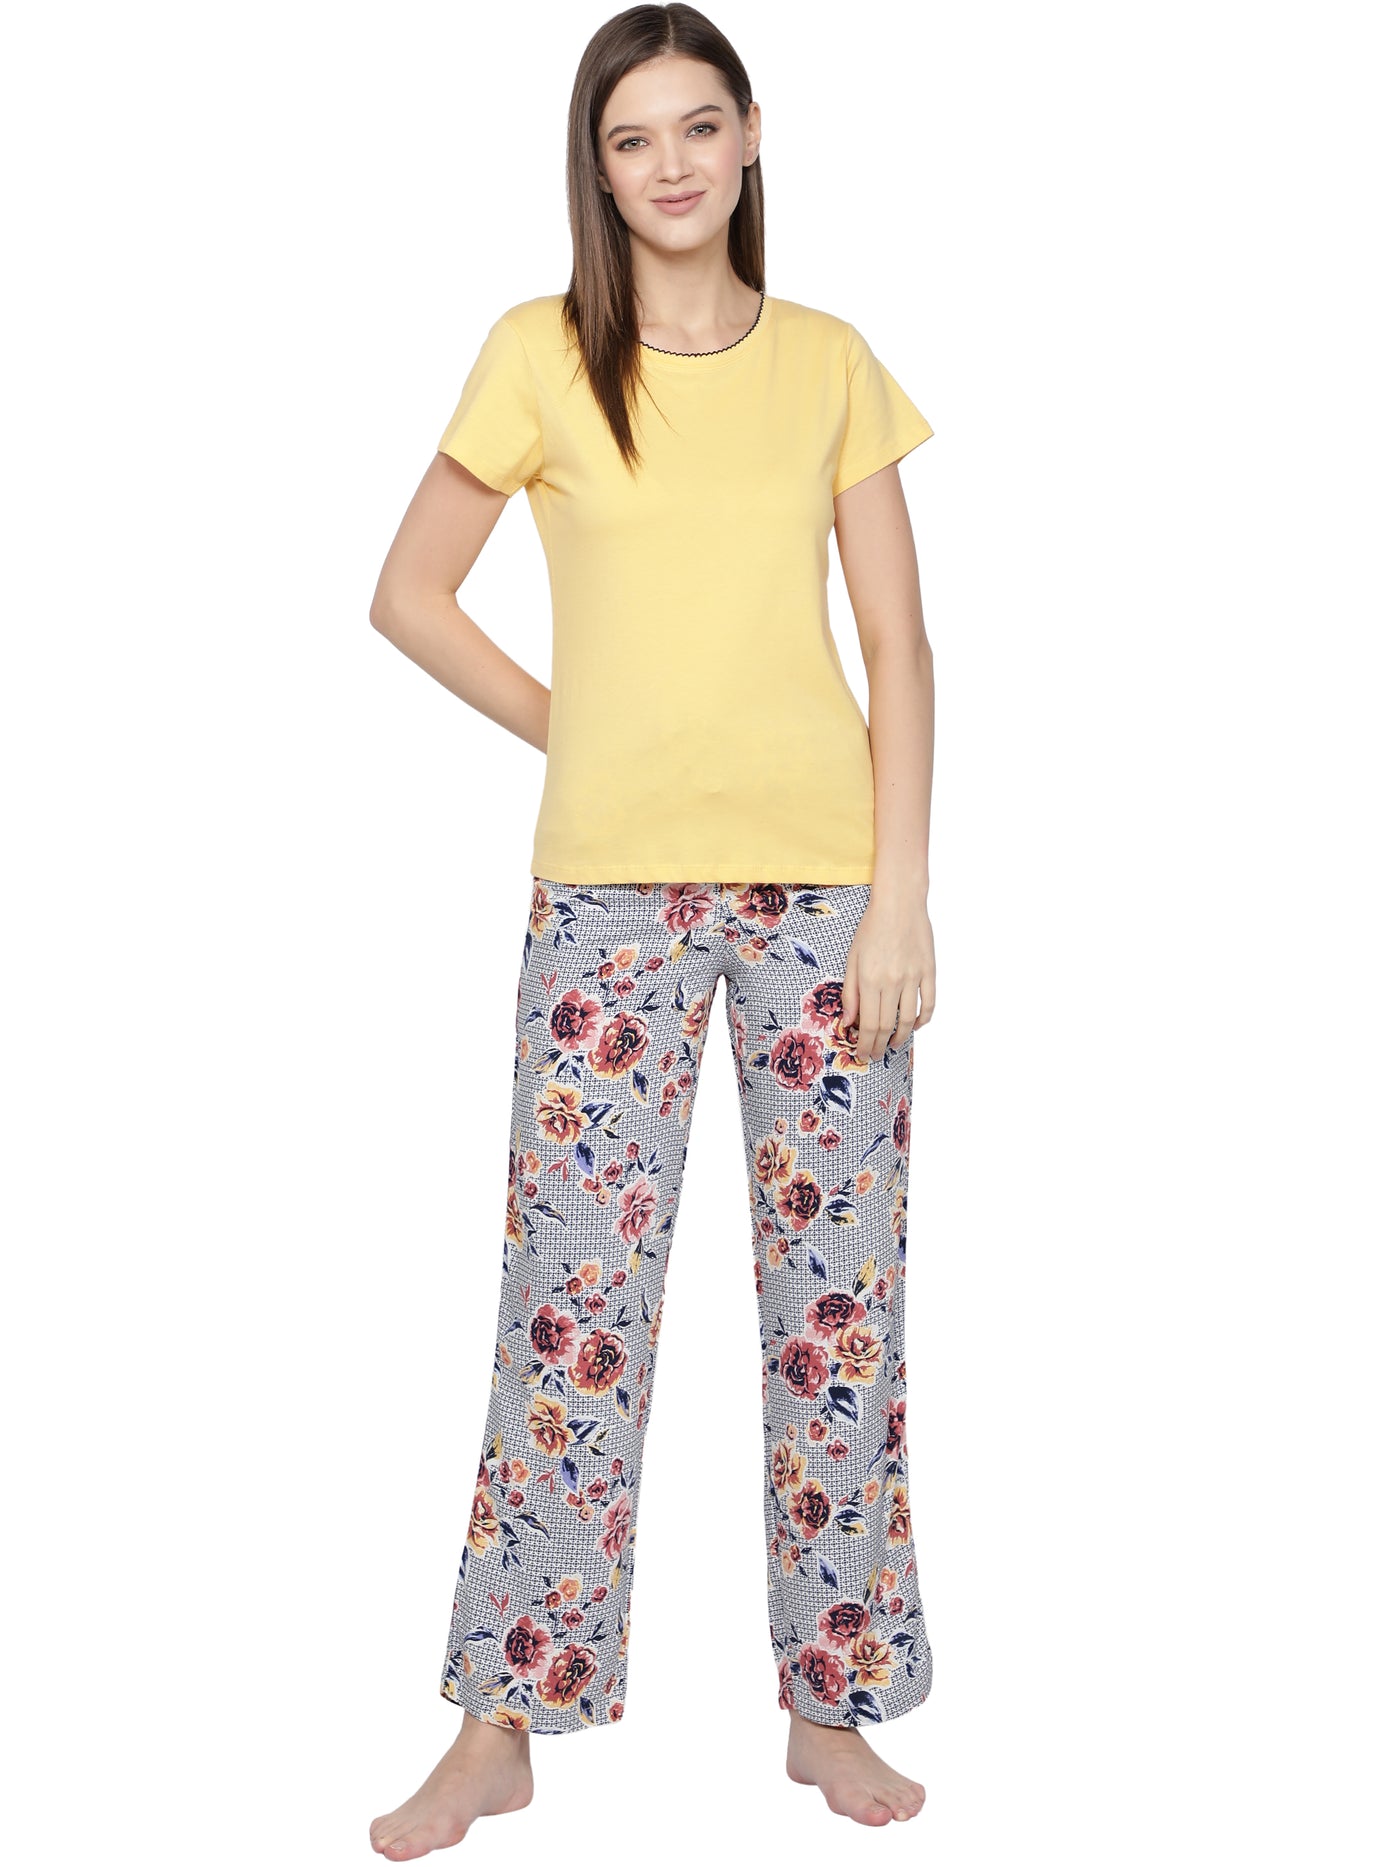 Pyjama Set for Women-Picnic Floral Print